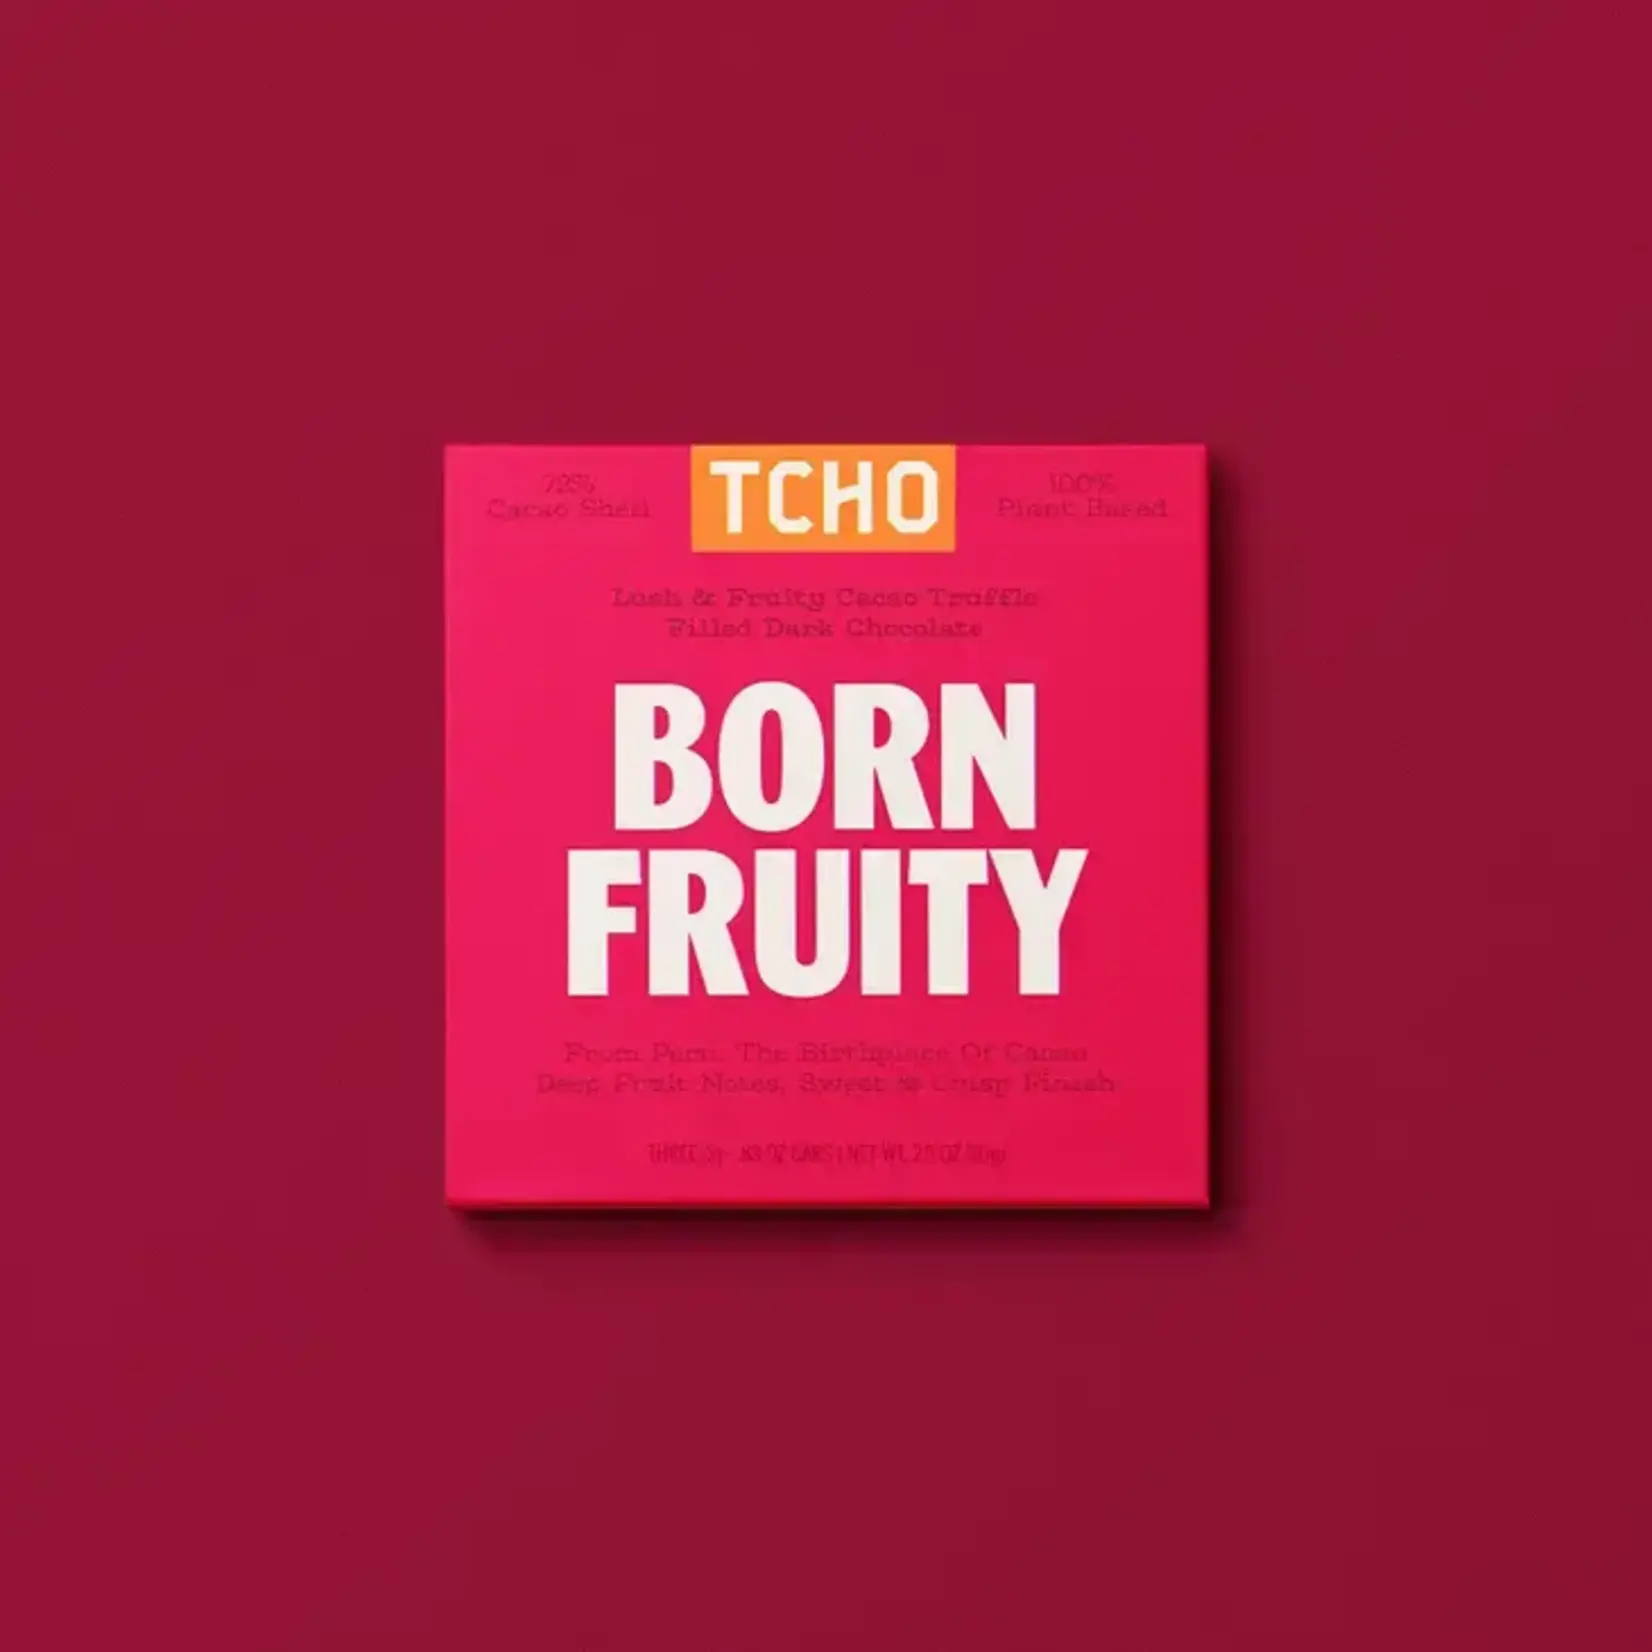 TCHO Born Fruity, Vegan Chocolate